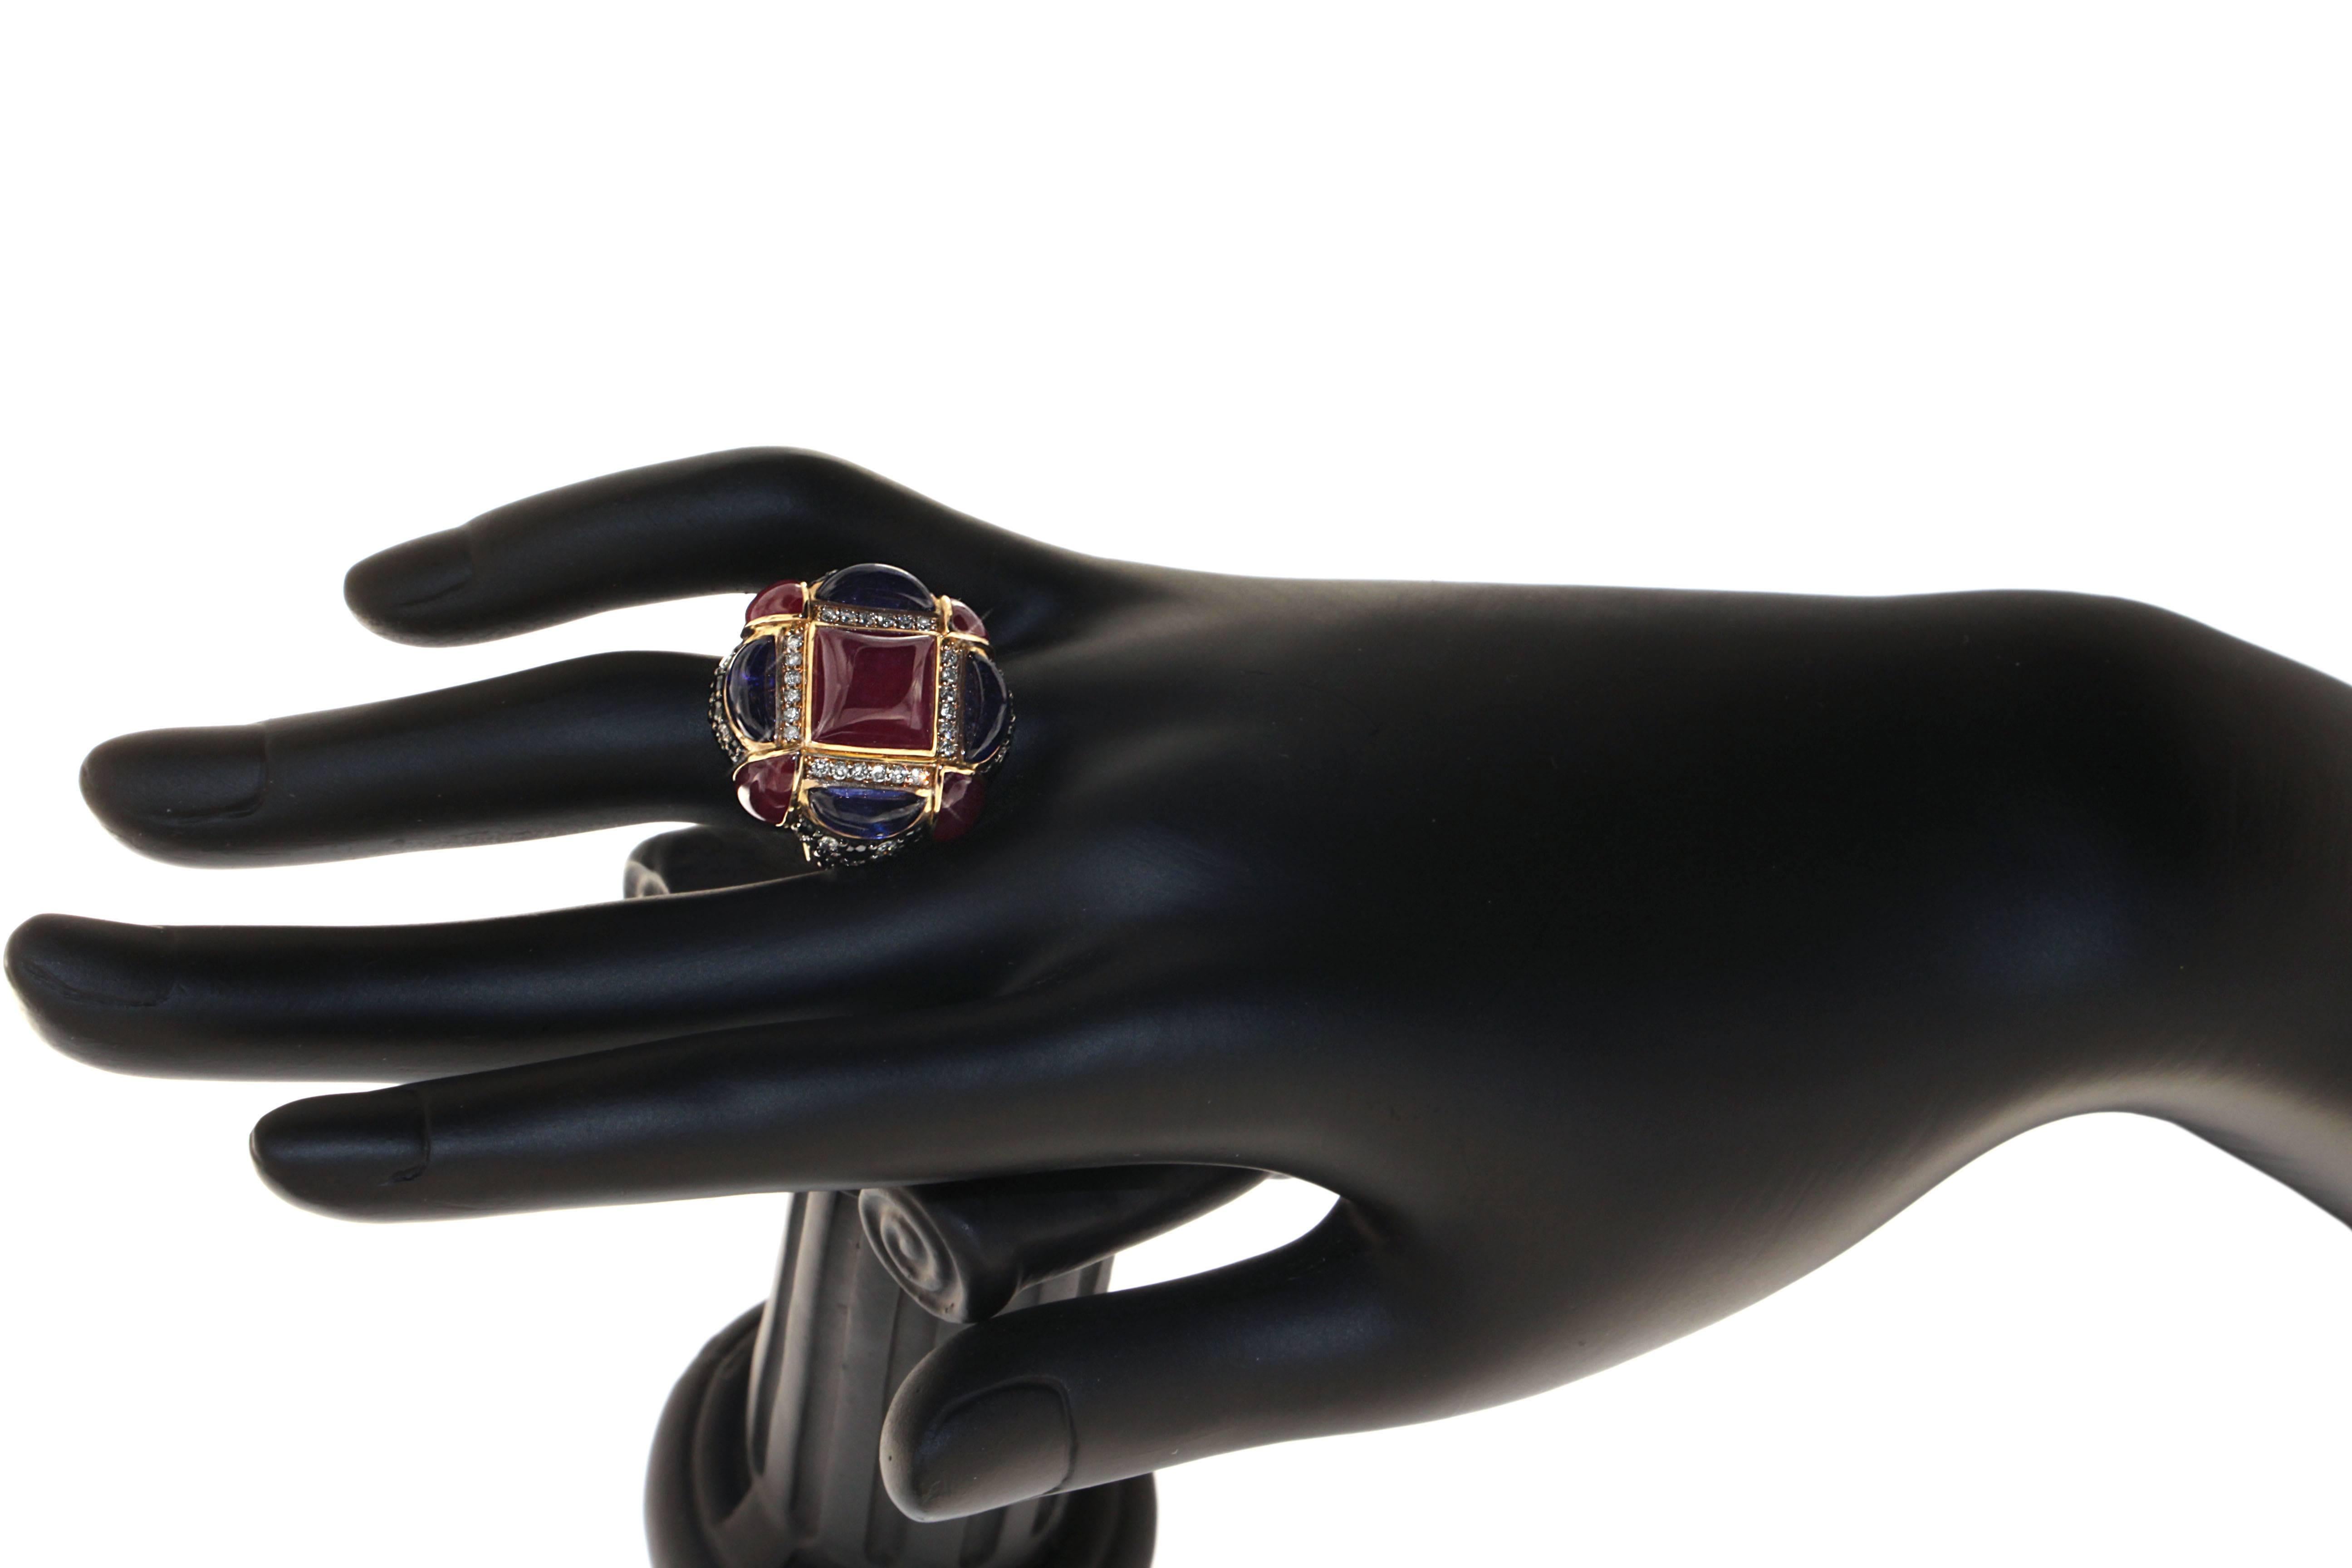 Russian Empire Lady Czar Ring, a Zorab Creation